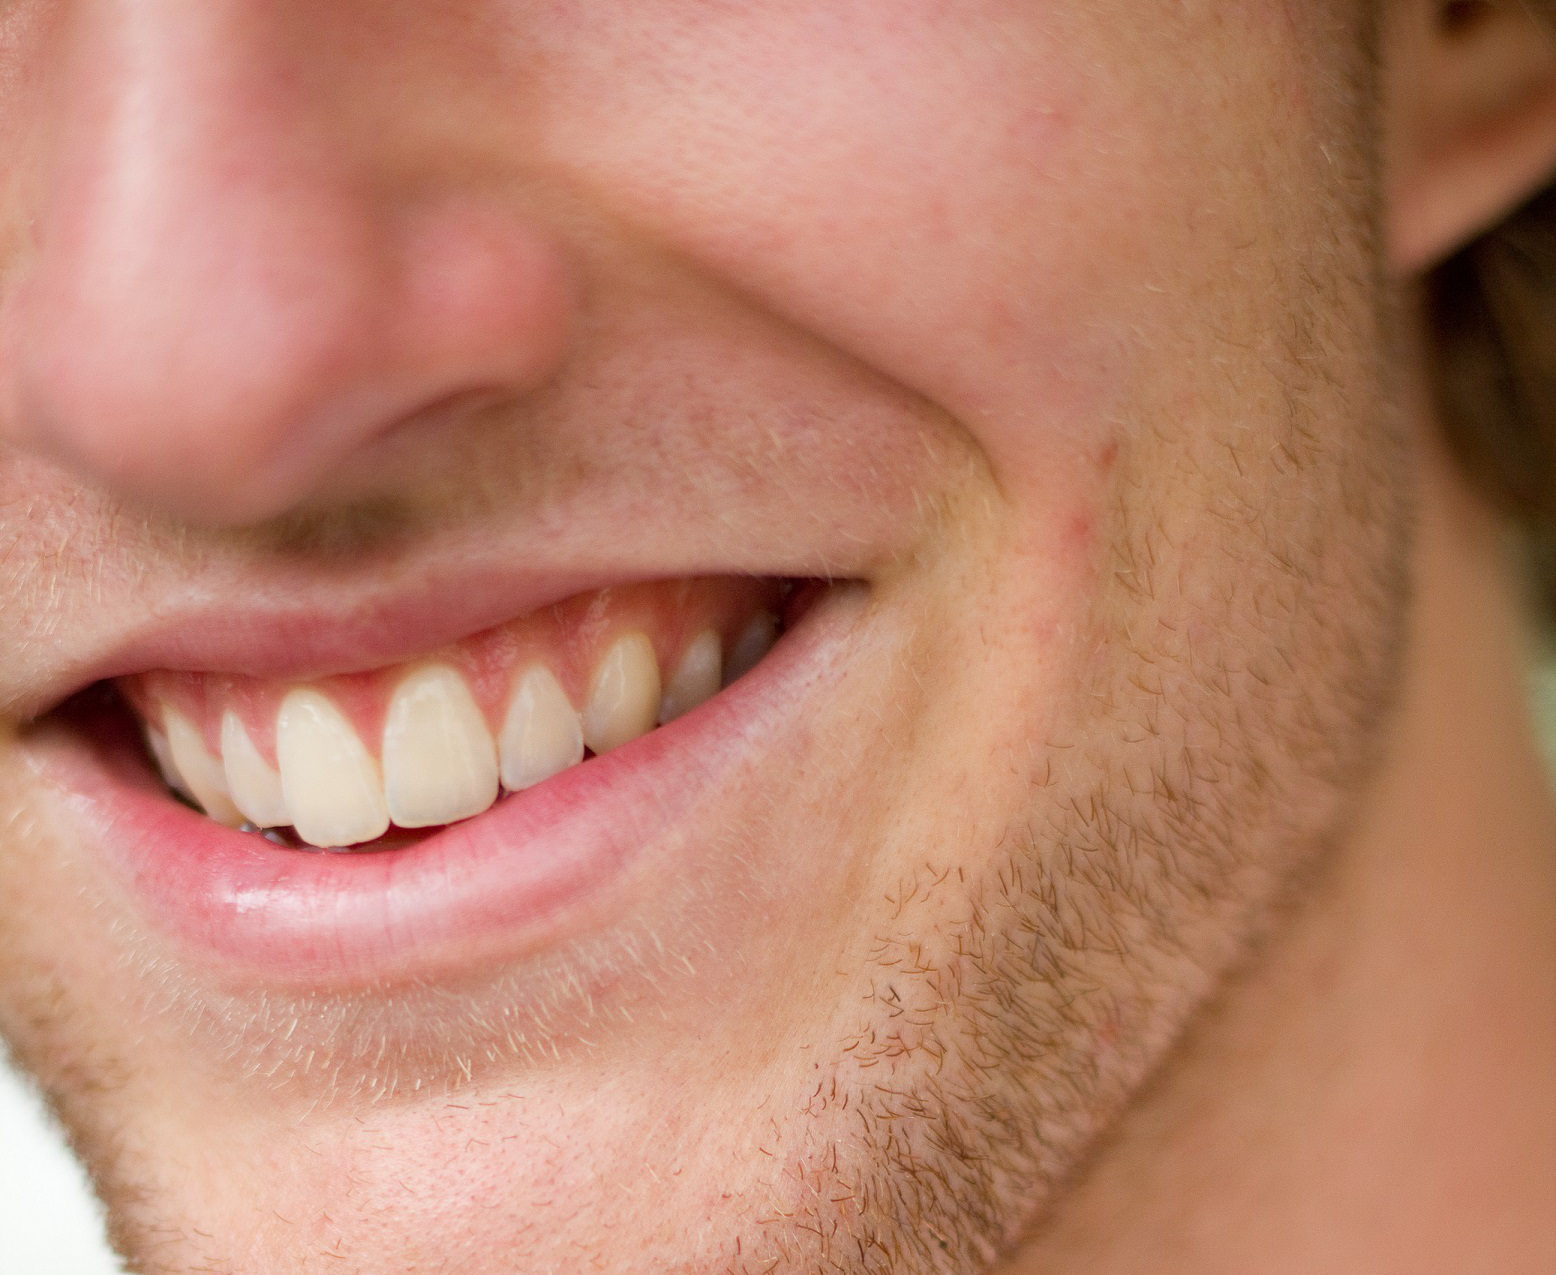 Les muscles zygomatiques se contractent pour sourire. © Tom Newby, Flickr, CC by 2.0